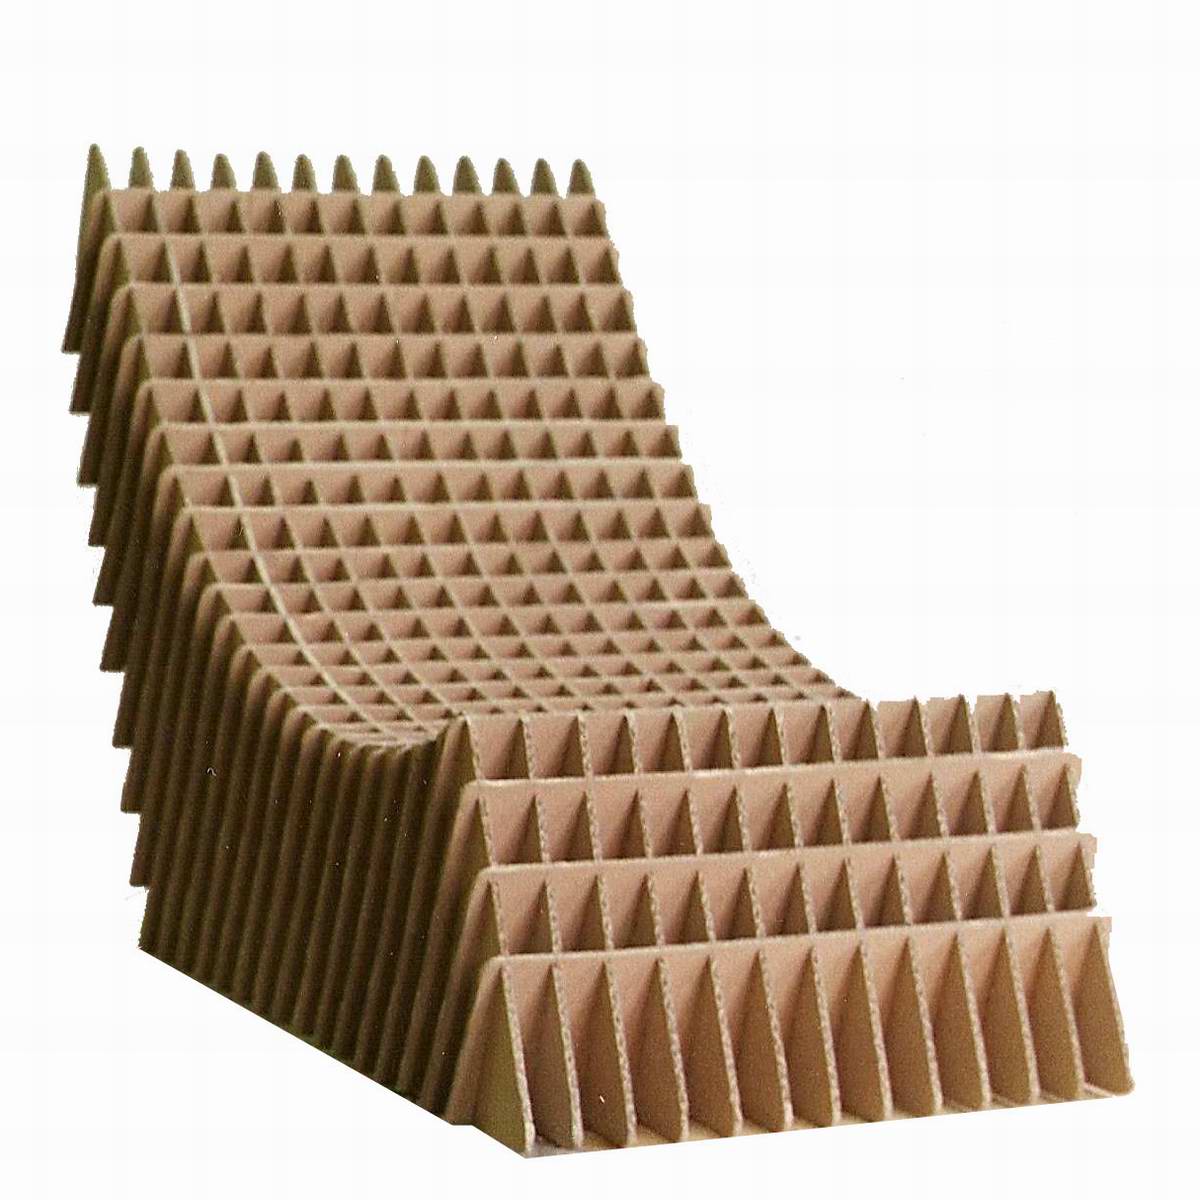 03_Piotr Pacalowski cardboard armchair 2.jpg